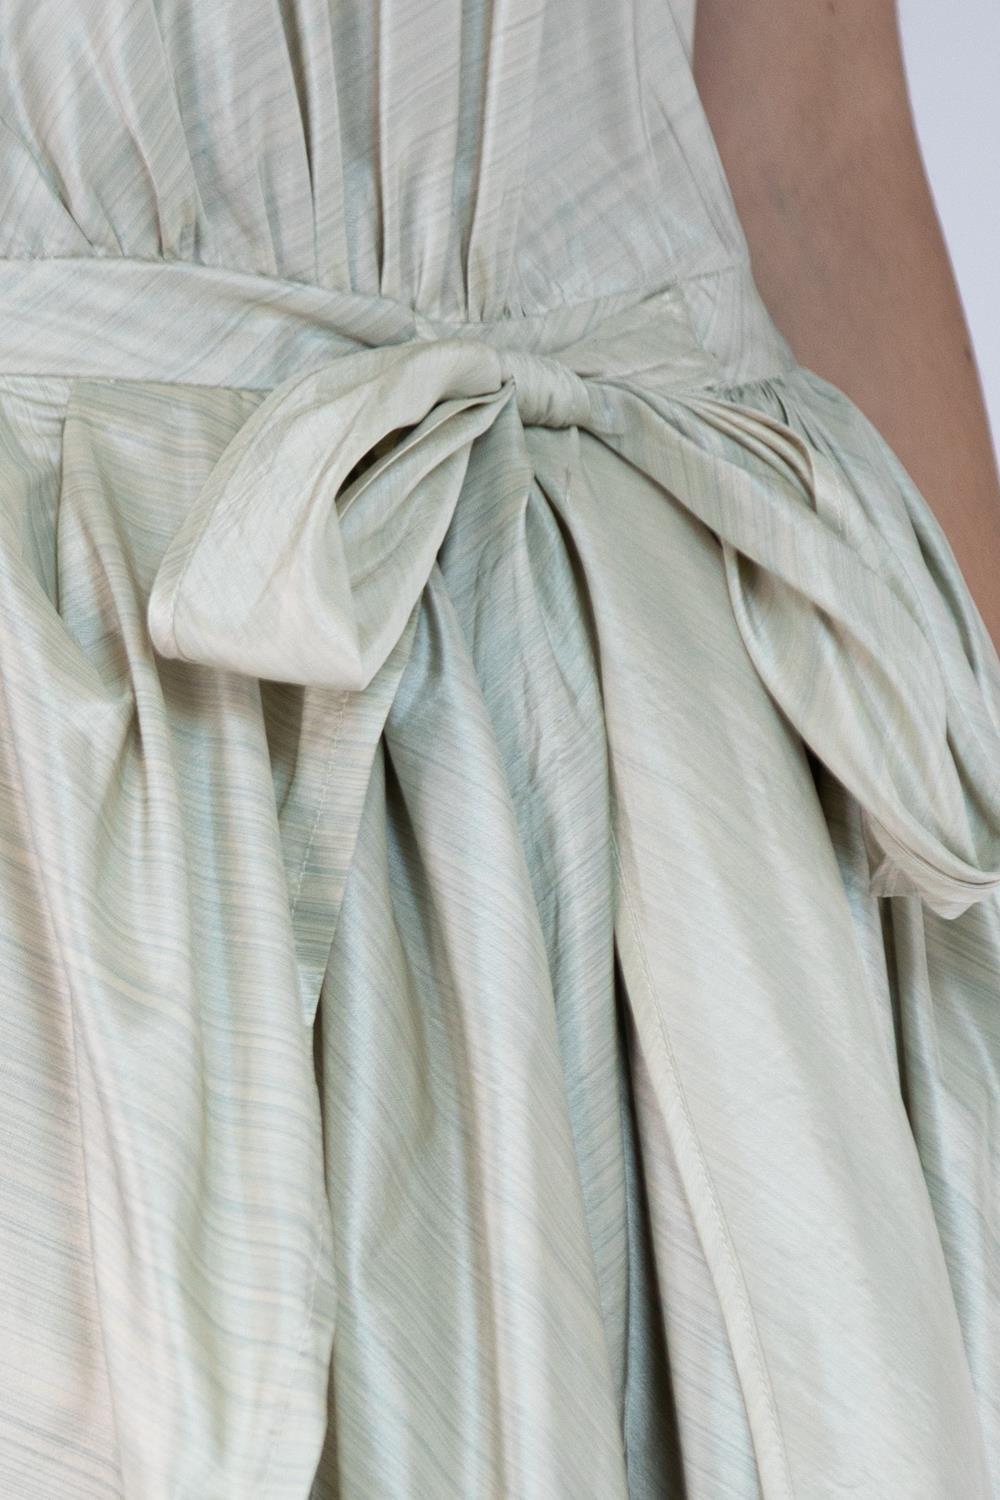 Morphew Collection Light Green Silk Taffeta Dress For Sale 4